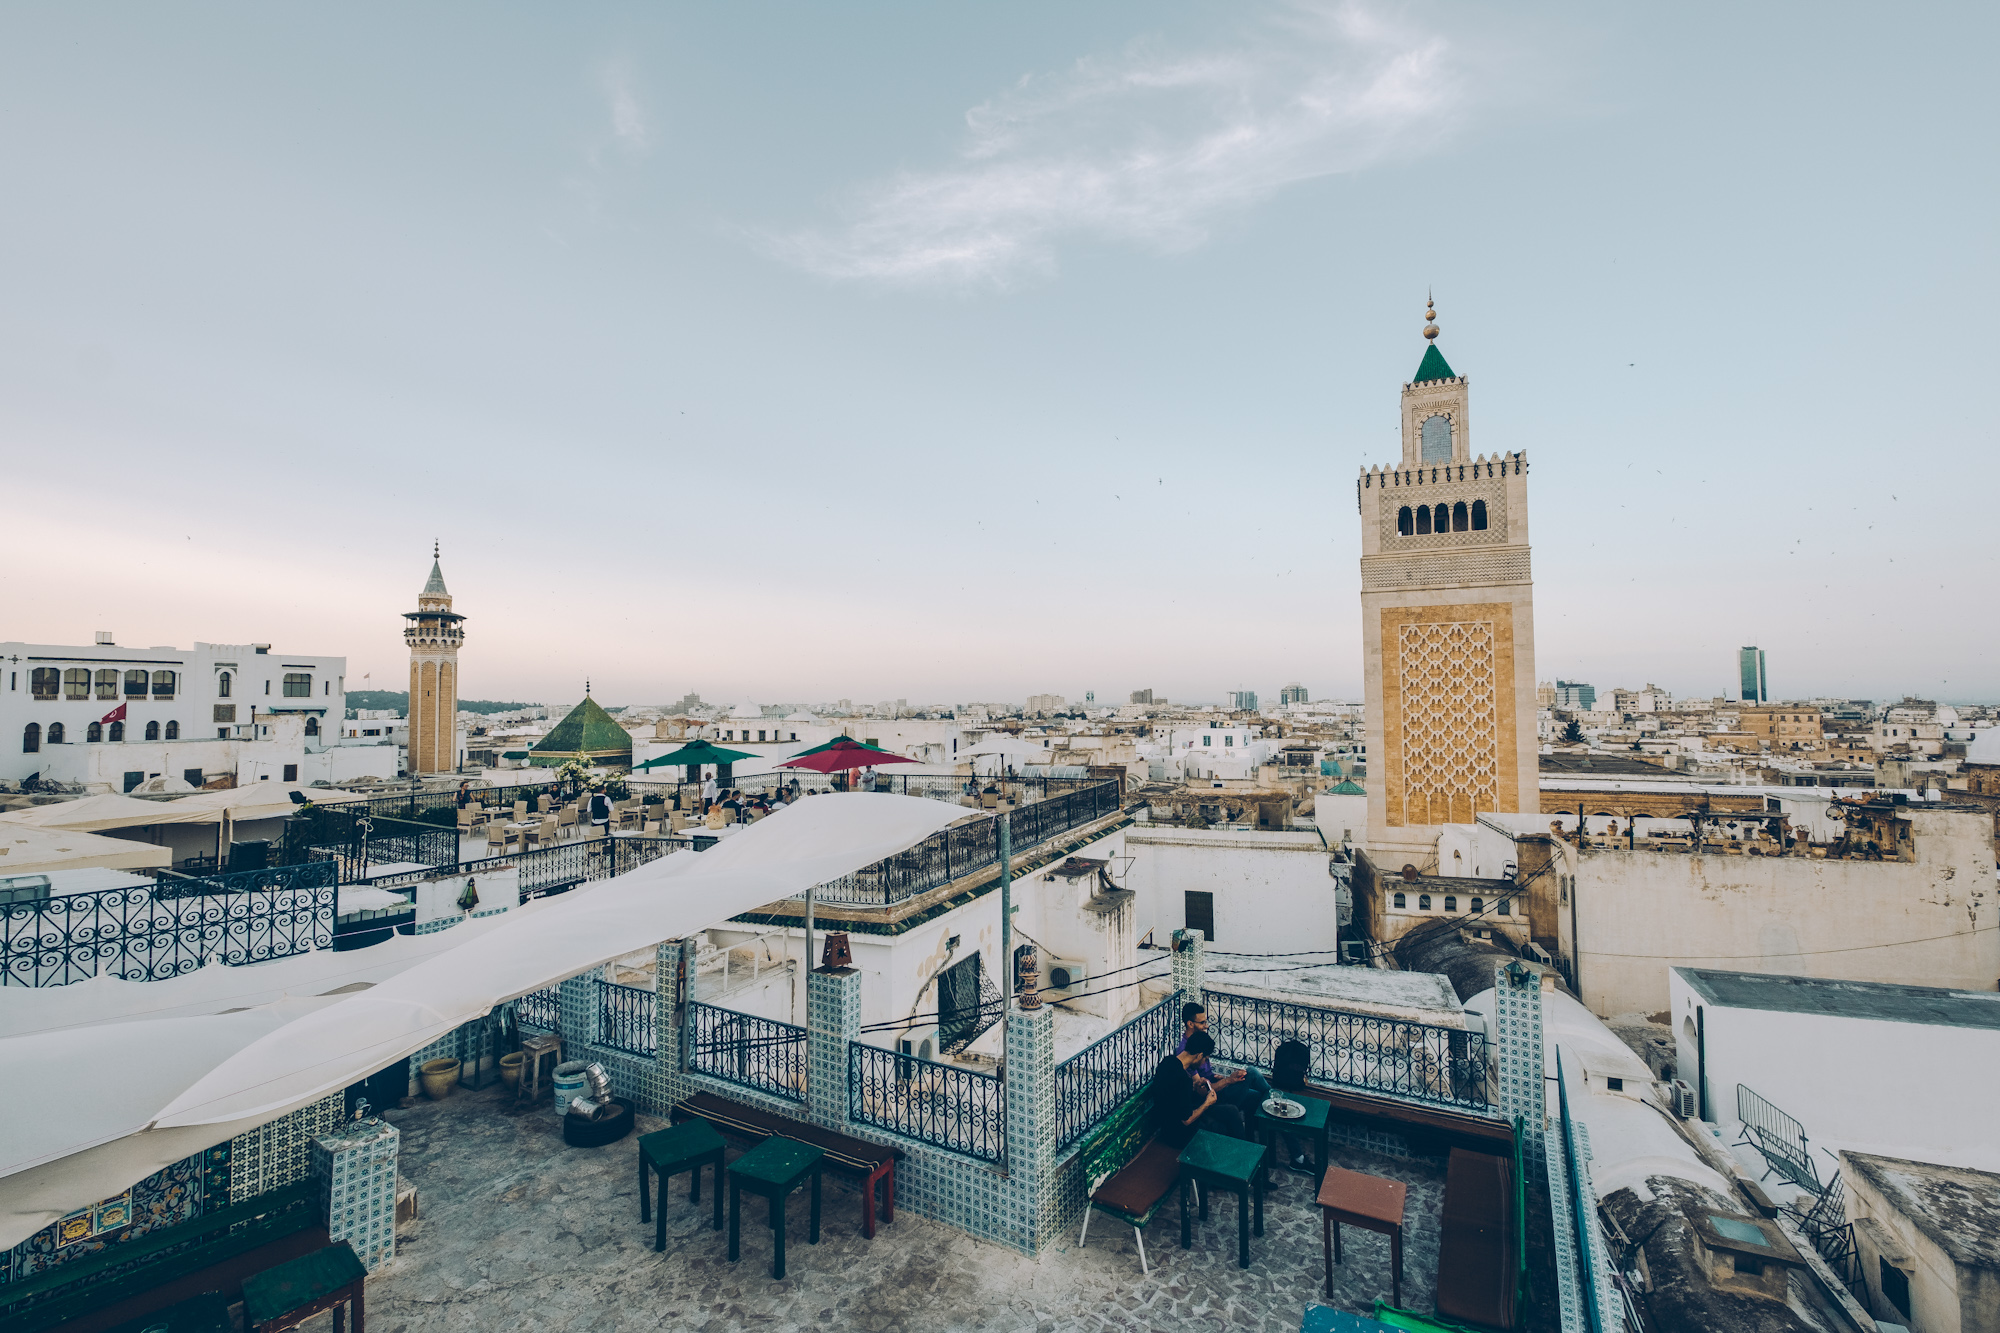 Rooftops of Tunis, Tunisia